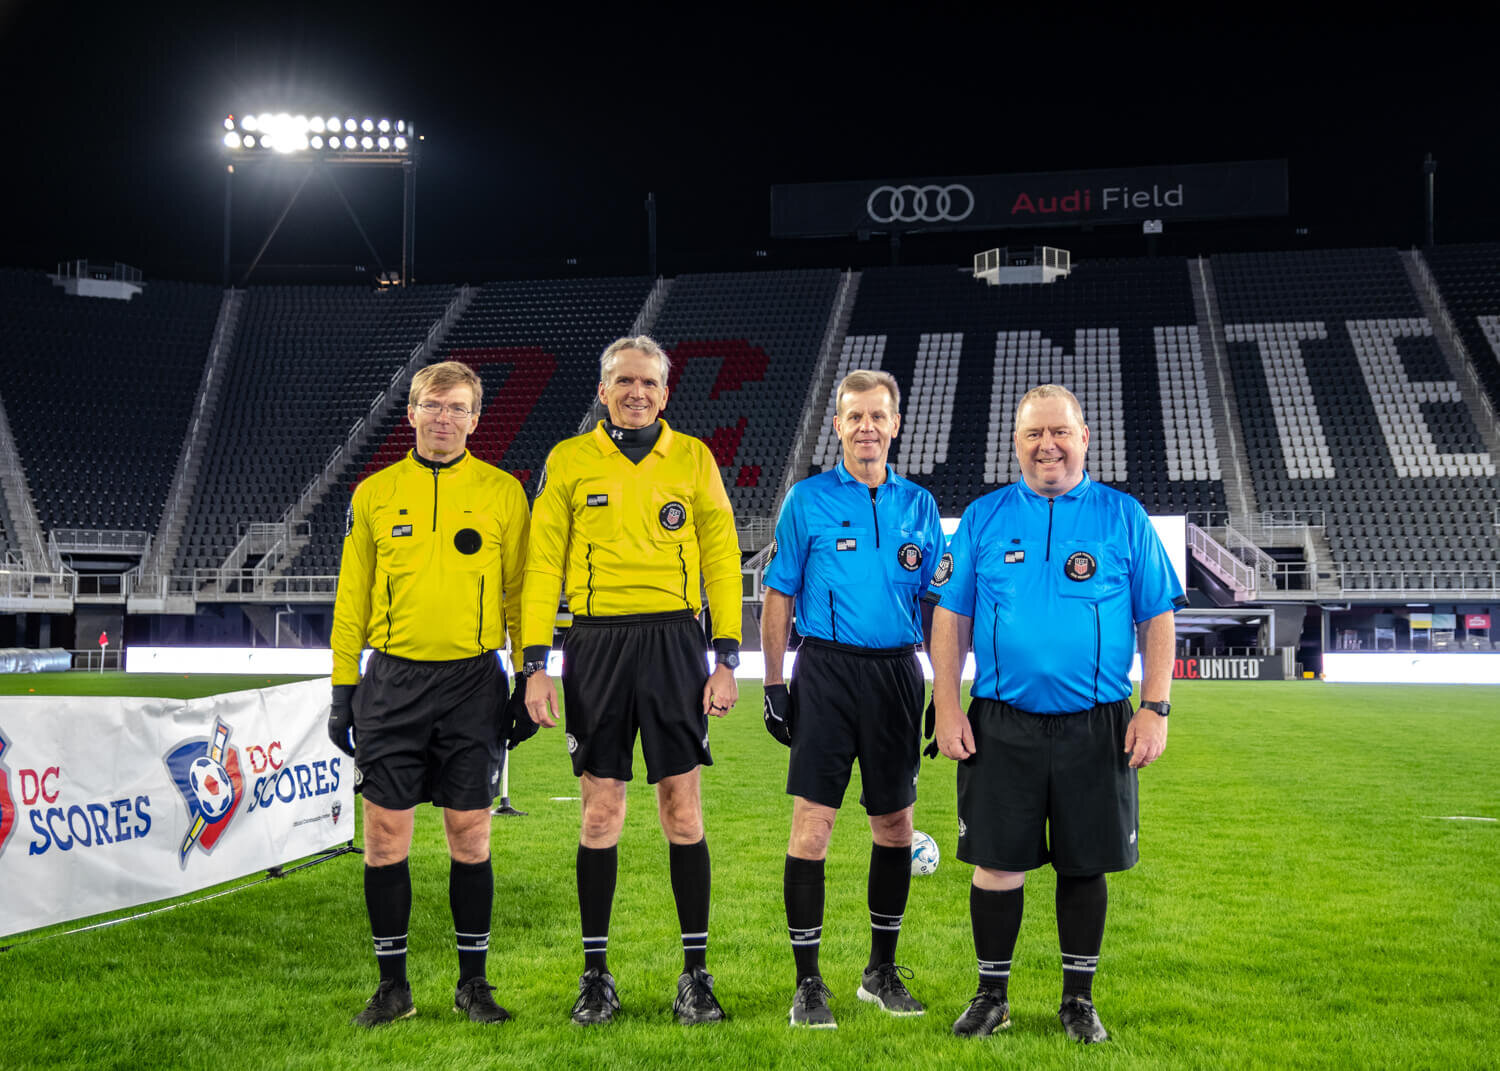 Referees-DC-Scores-Capital-Cup-2019-Youth-Soccer-Tournament-Audi-Field-United-Washington-crvnka-Photography-04.JPG